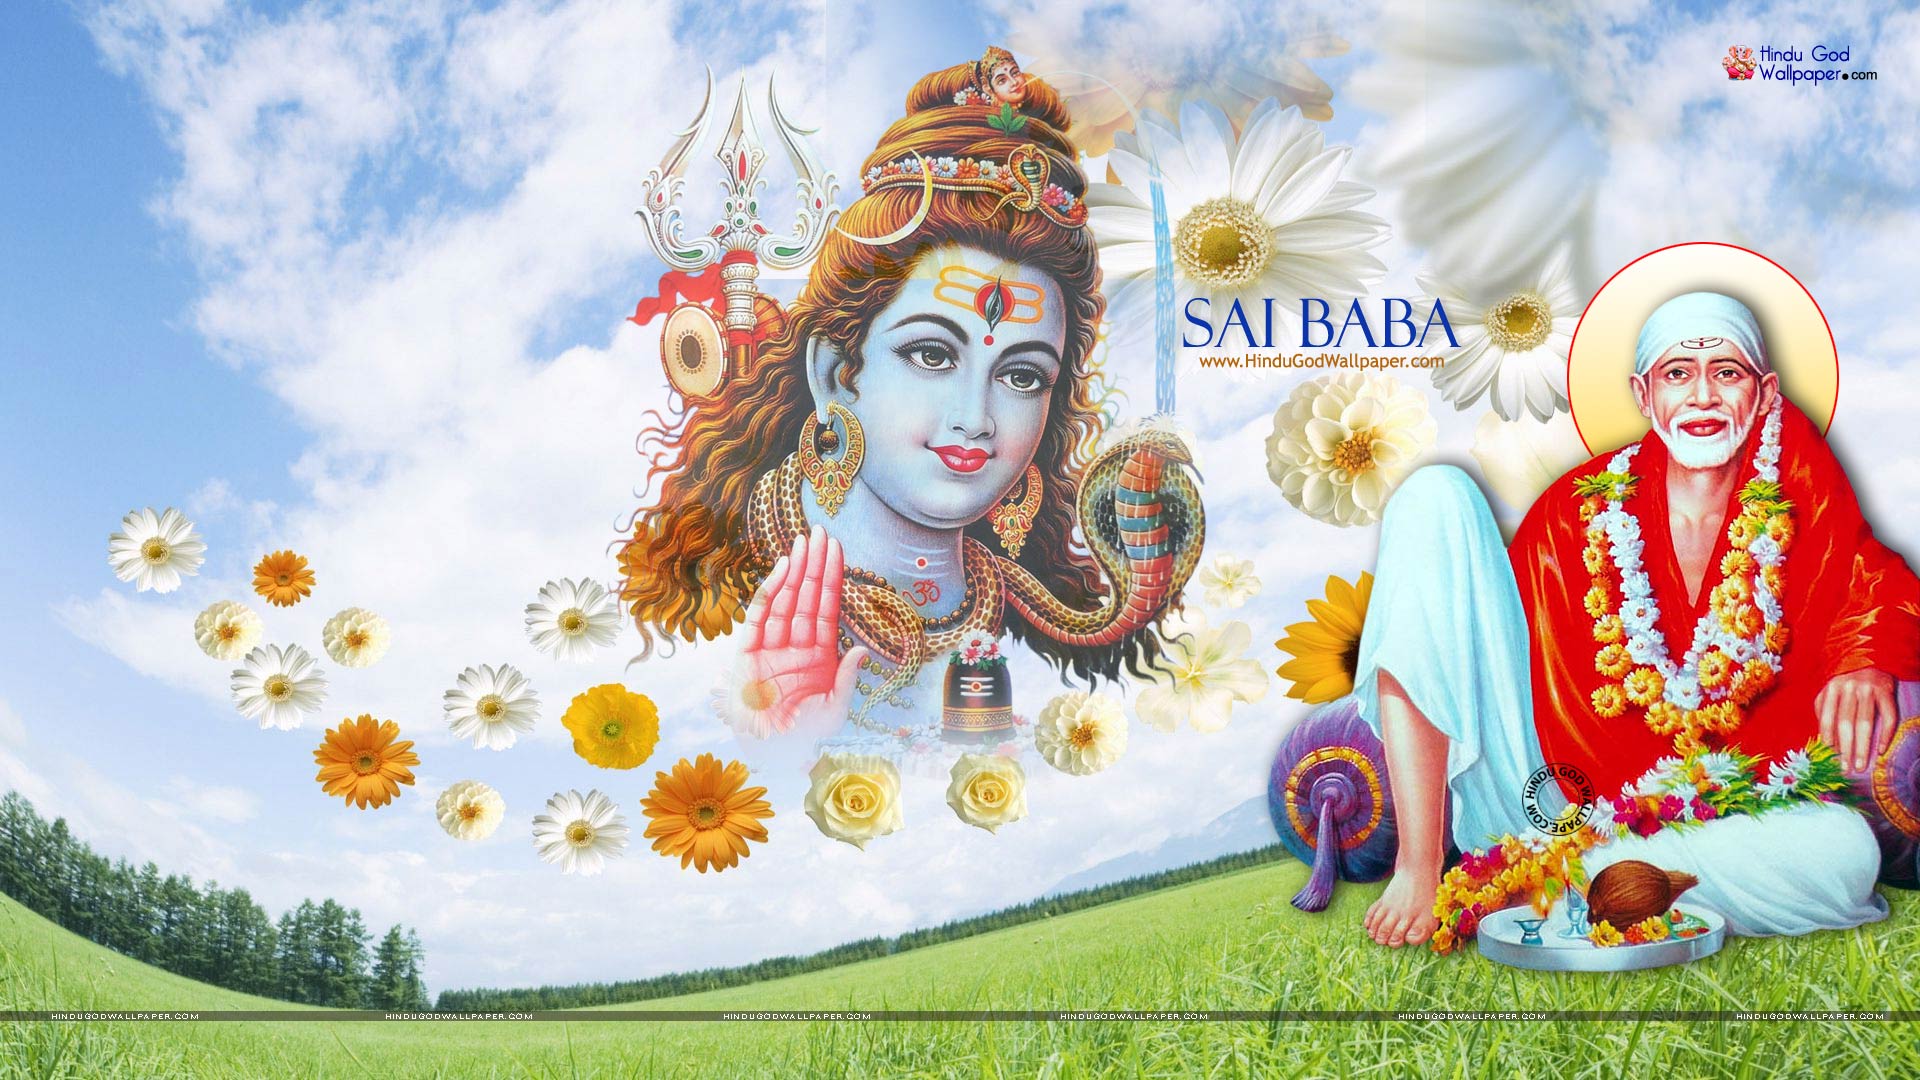 1080p Sai Baba HD Wallpaper Images Full Size Free Download